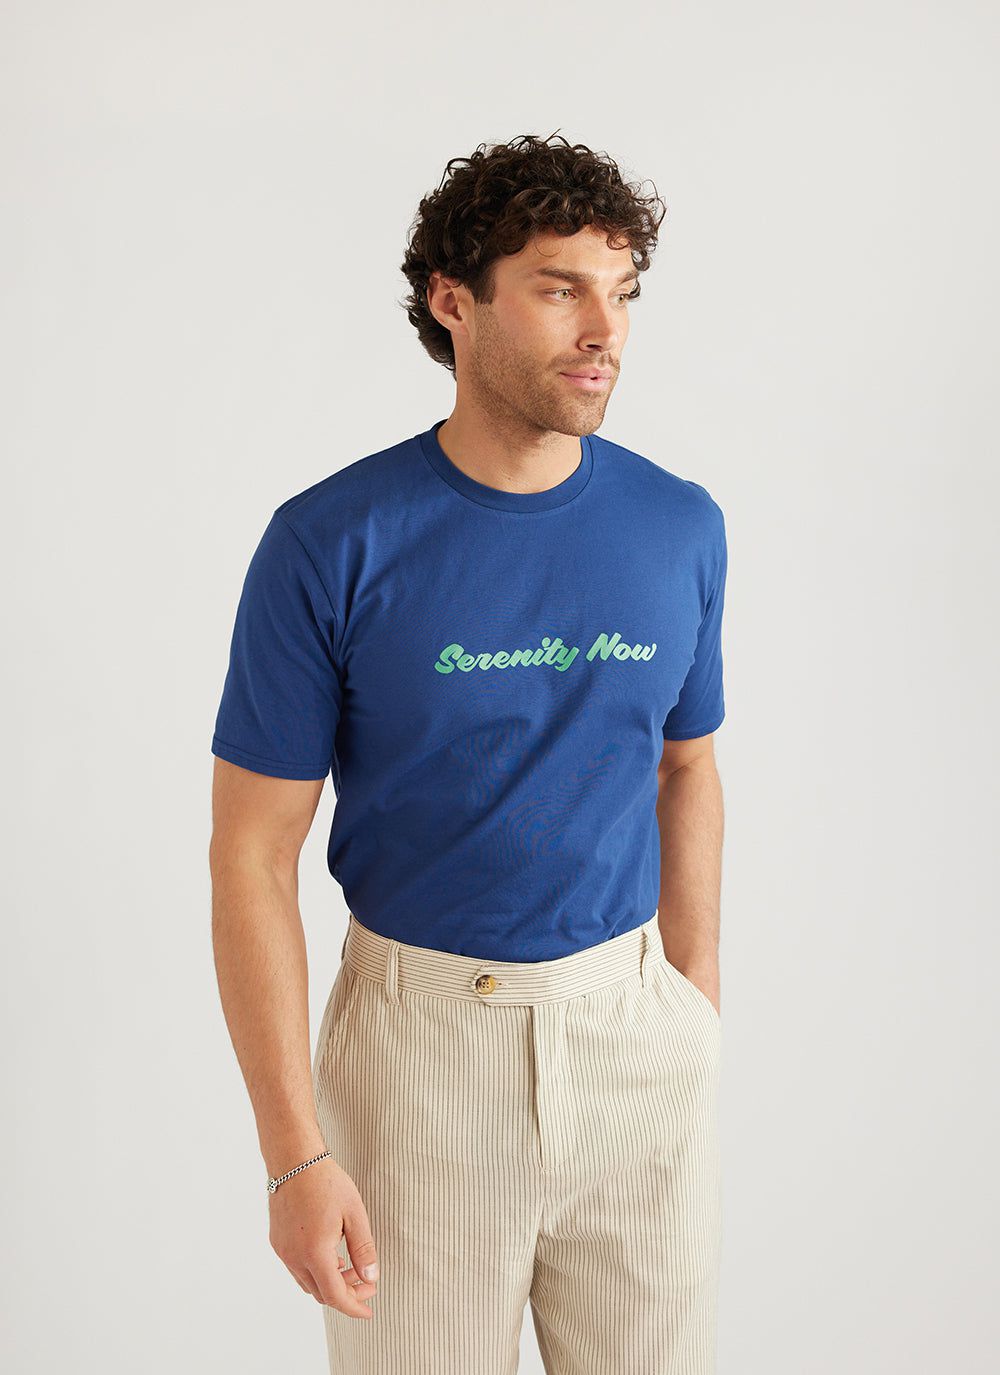 Frank | Seinfeld Percival Shirt Indigo T | Percival Menswear | 